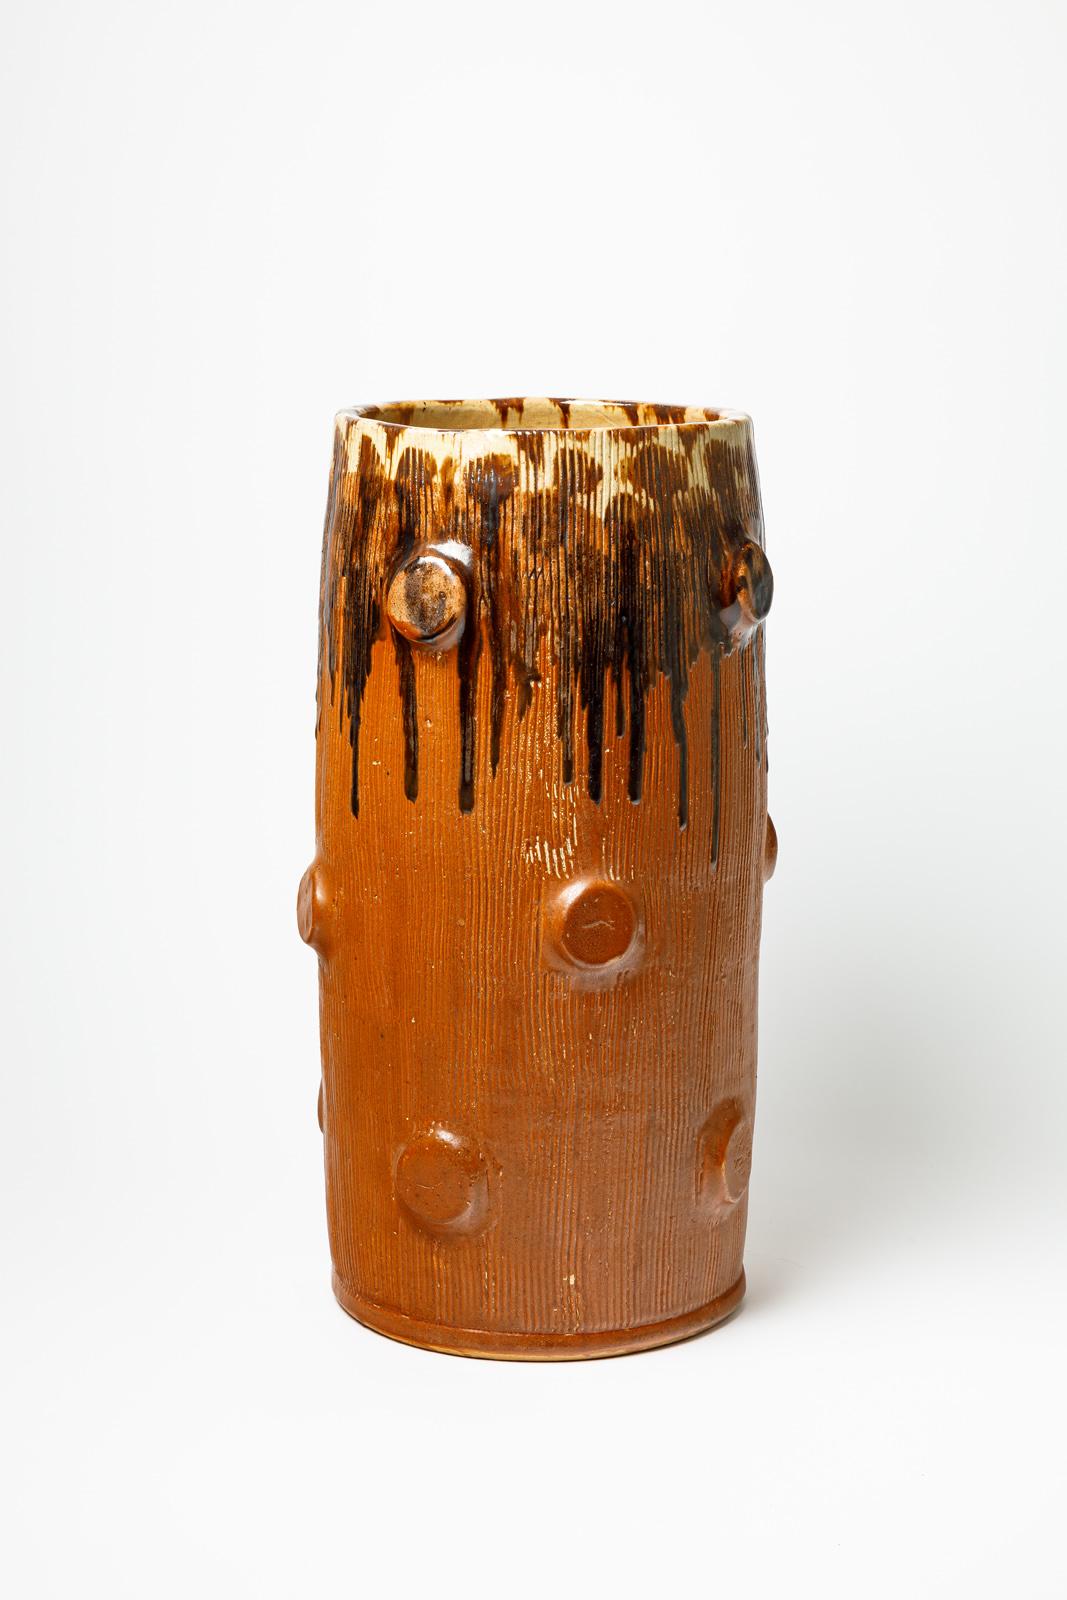 Art Deco Orange and brown glazed ceramic vase by Joseph Talbot, circa 1940-1950. For Sale